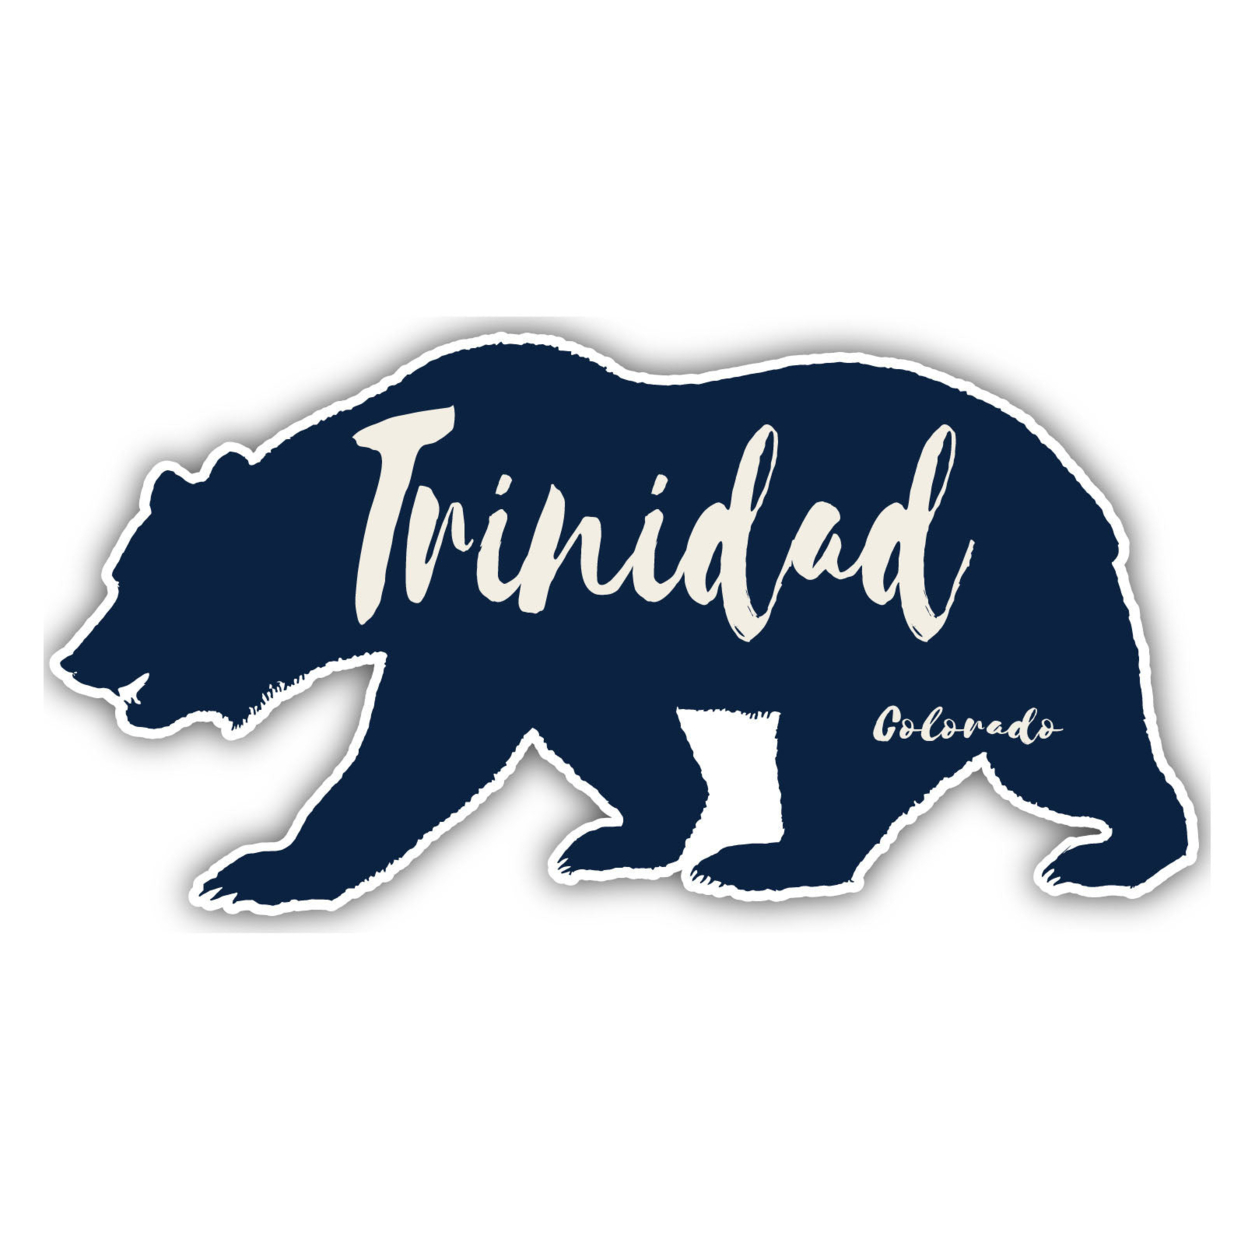 Trinidad Colorado Souvenir Decorative Stickers (Choose Theme And Size) - Single Unit, 2-Inch, Adventures Awaits